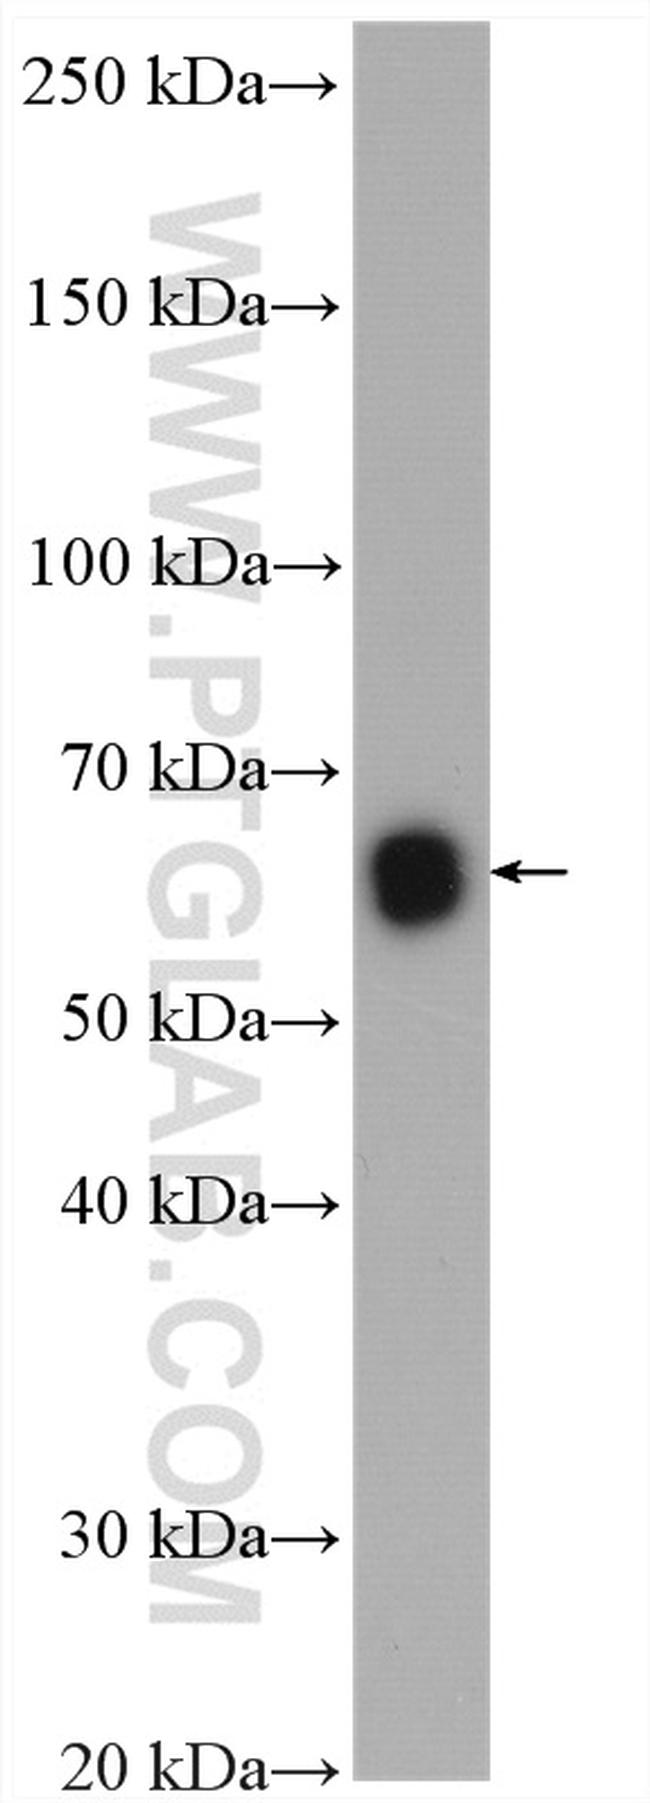 ISYNA1 Antibody in Western Blot (WB)